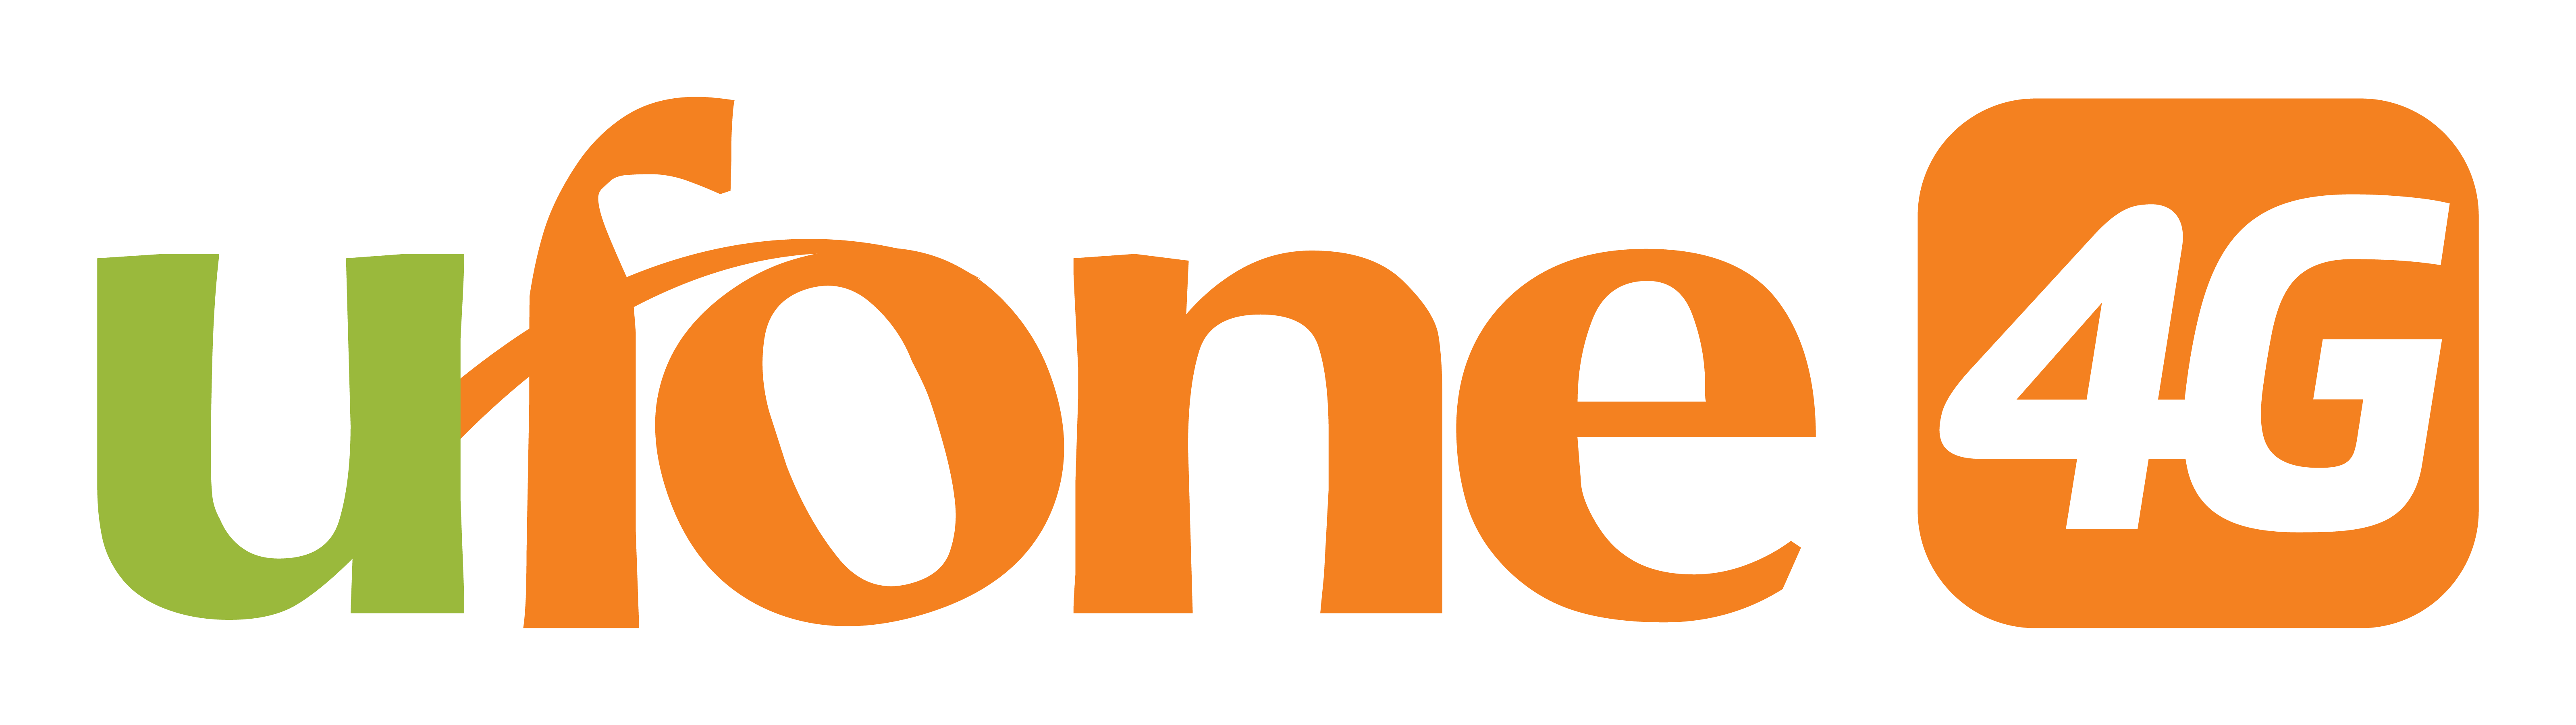 Ufone 4G logo